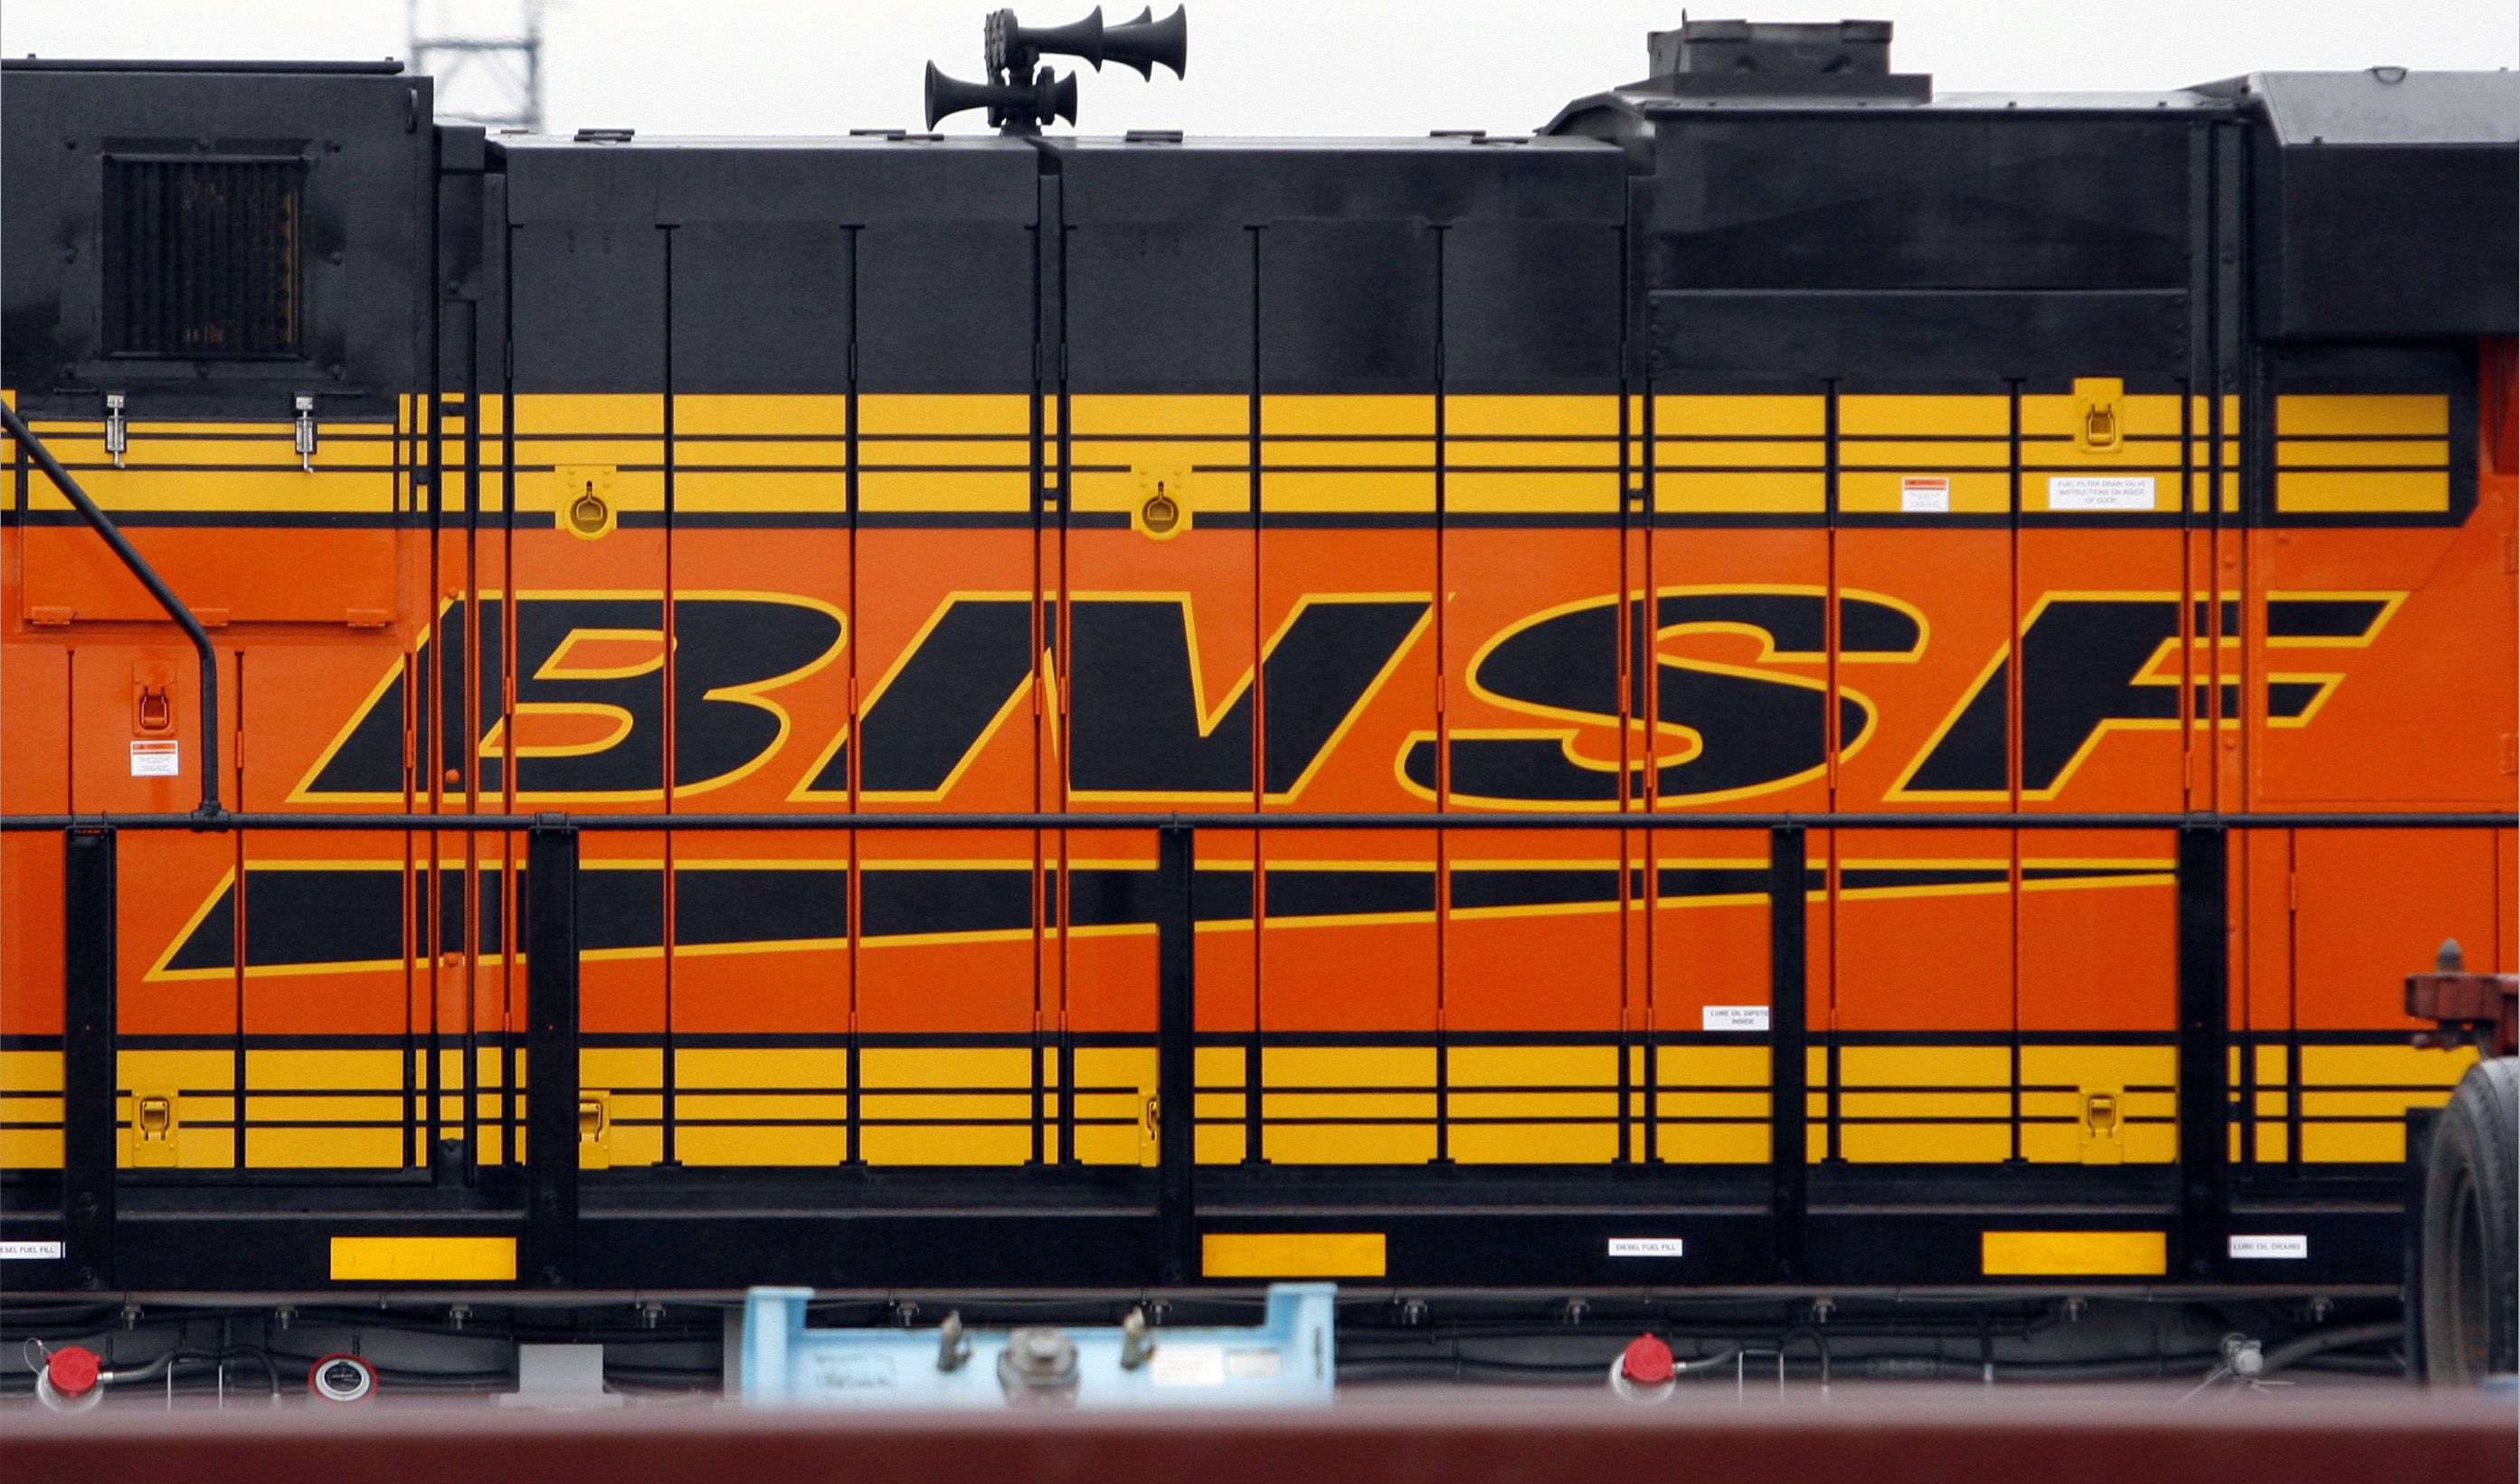 Mathew on Instagram: “BNSF 4707 leads the westbound BNSF train